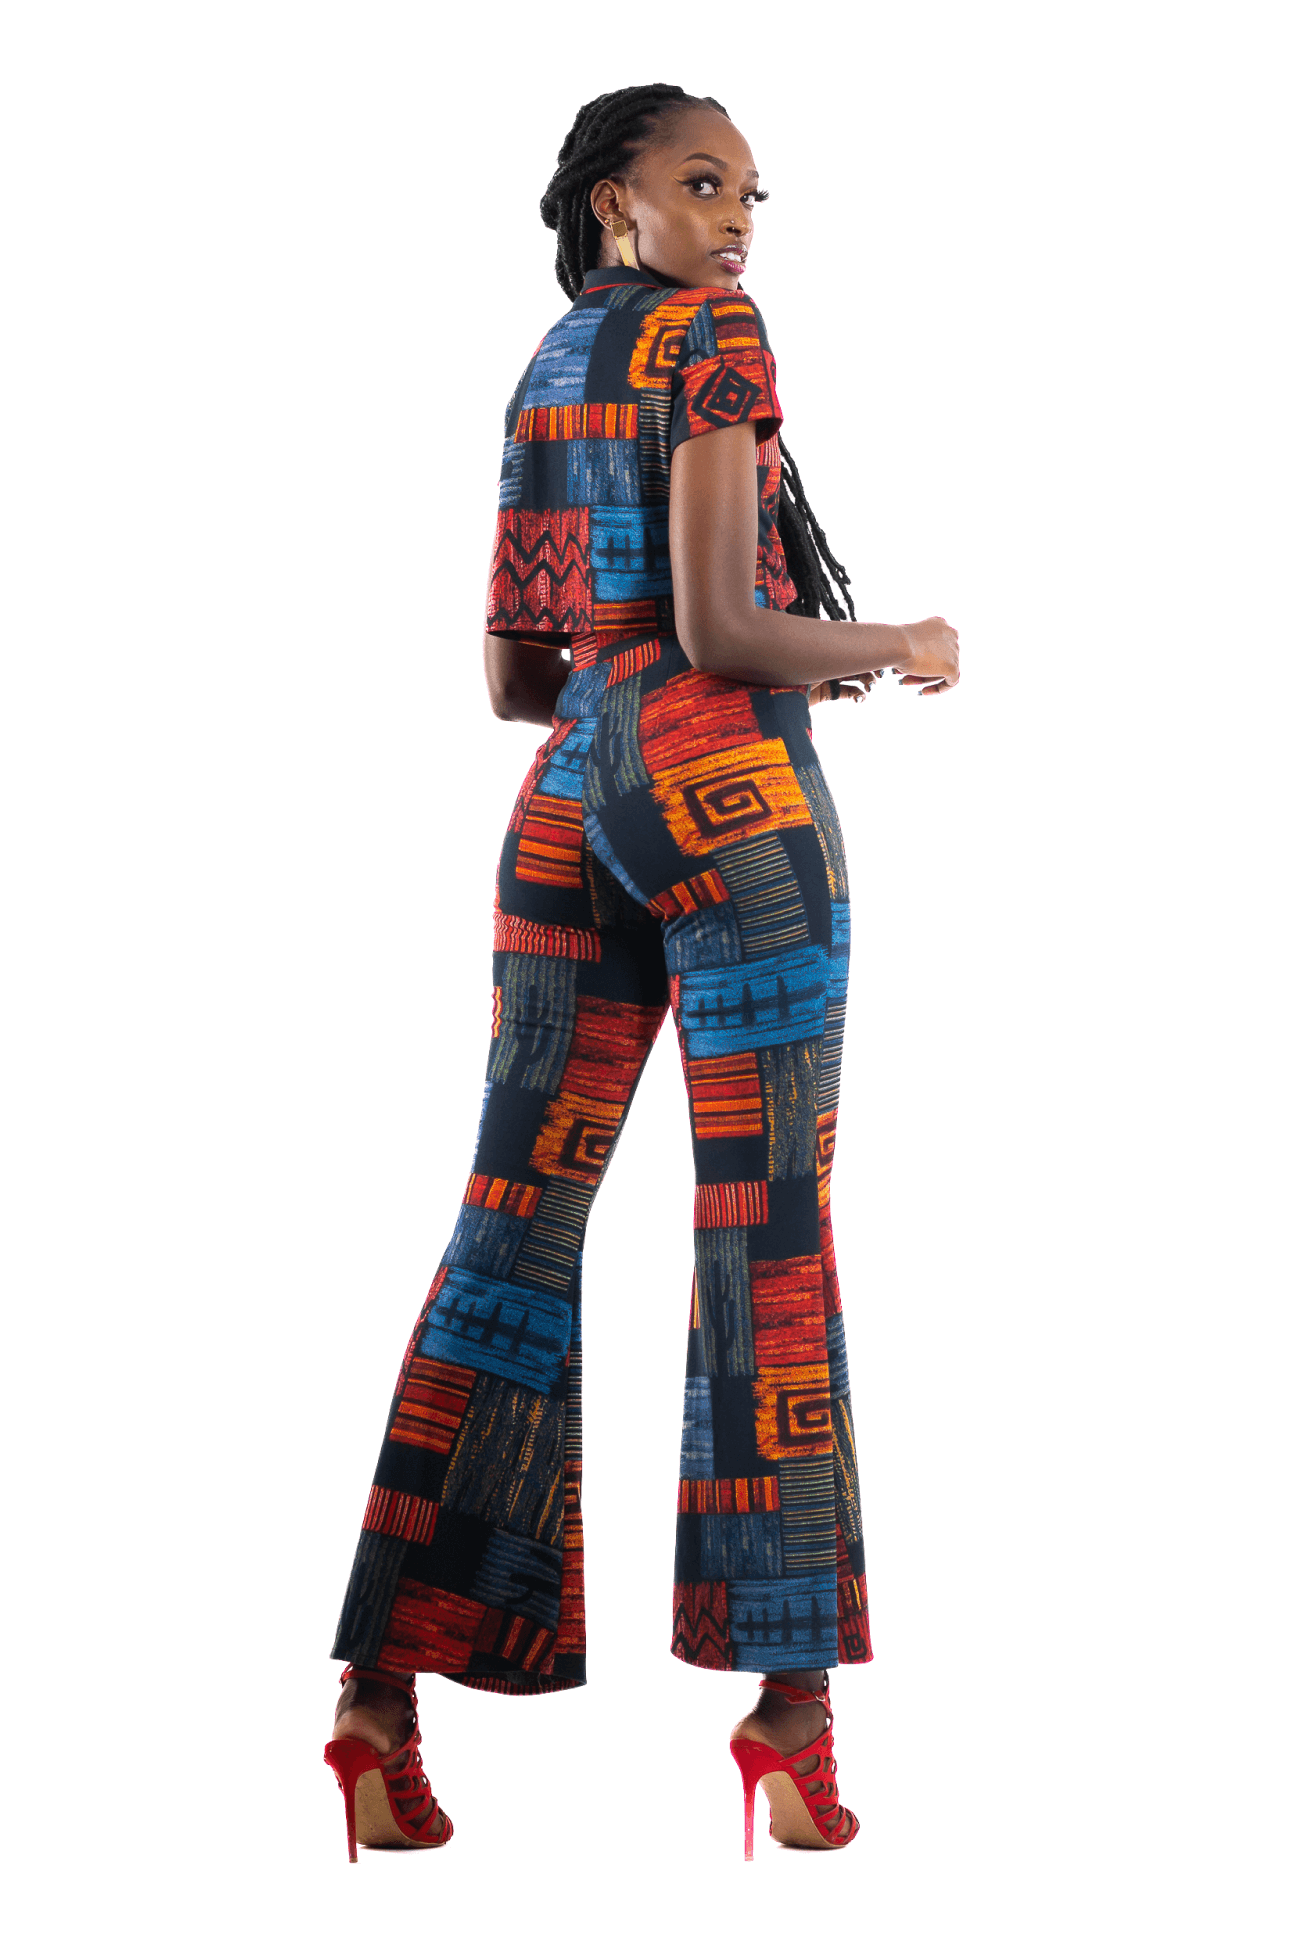 Shop Retro Print Flare Pants and Crop Top Set by Eva Wambutu on Arrai.